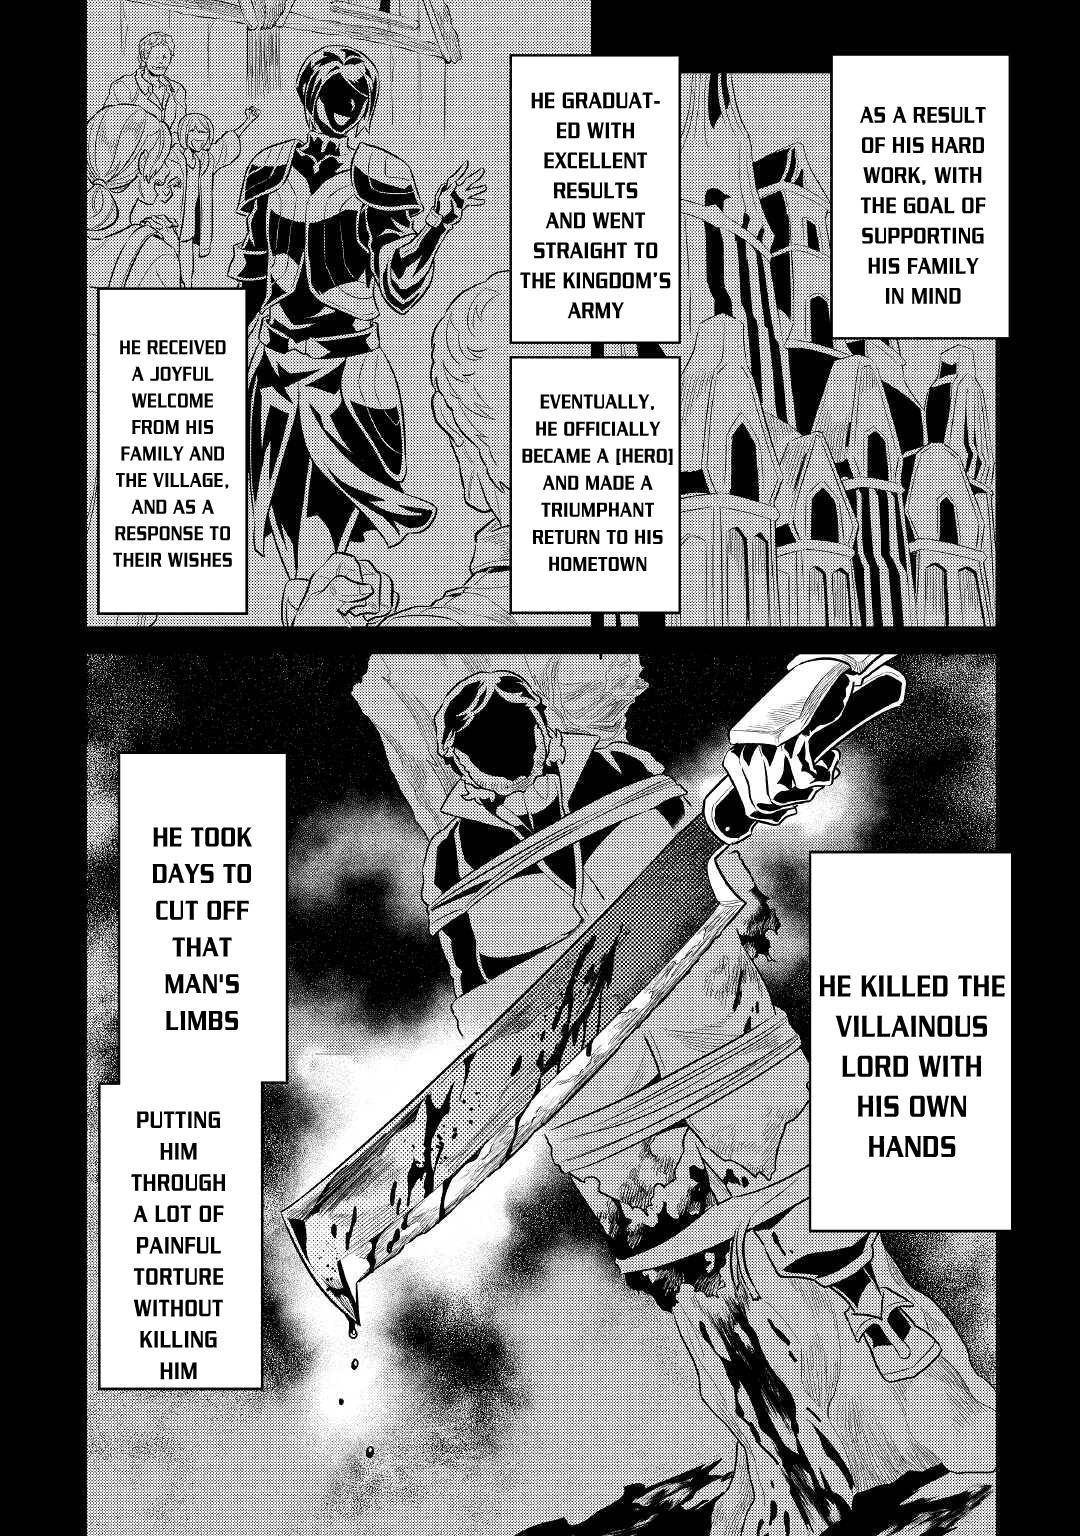 Read Re:Monster Manga English [New Chapters] Online Free - MangaClash